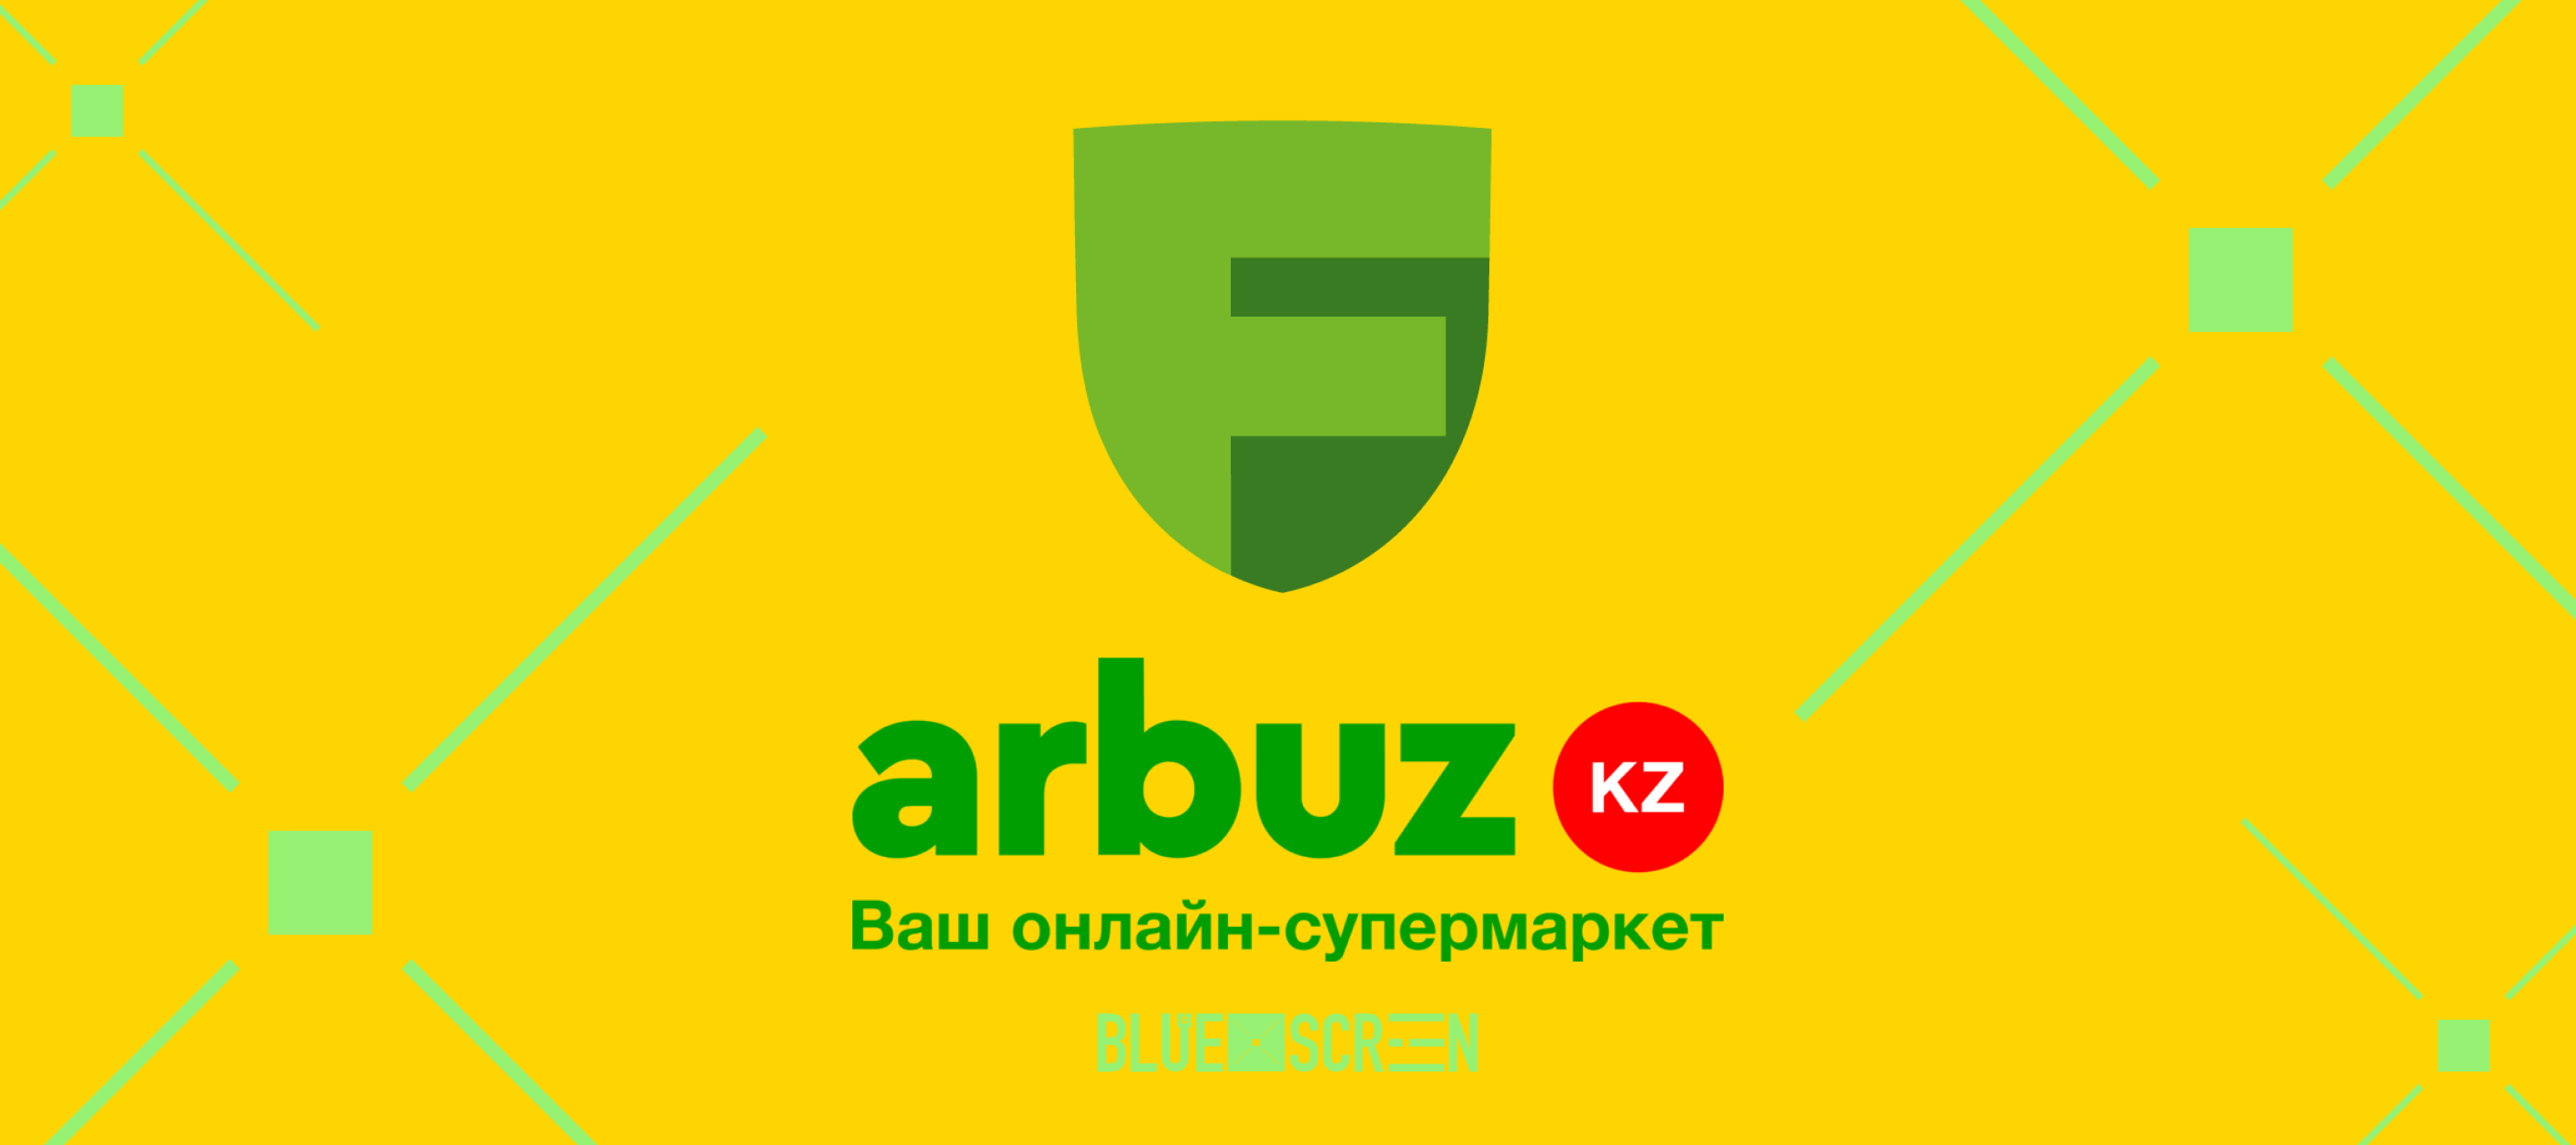 Freedom Holding Corp. приобрел онлайн-супермаркет Arbuz.kz